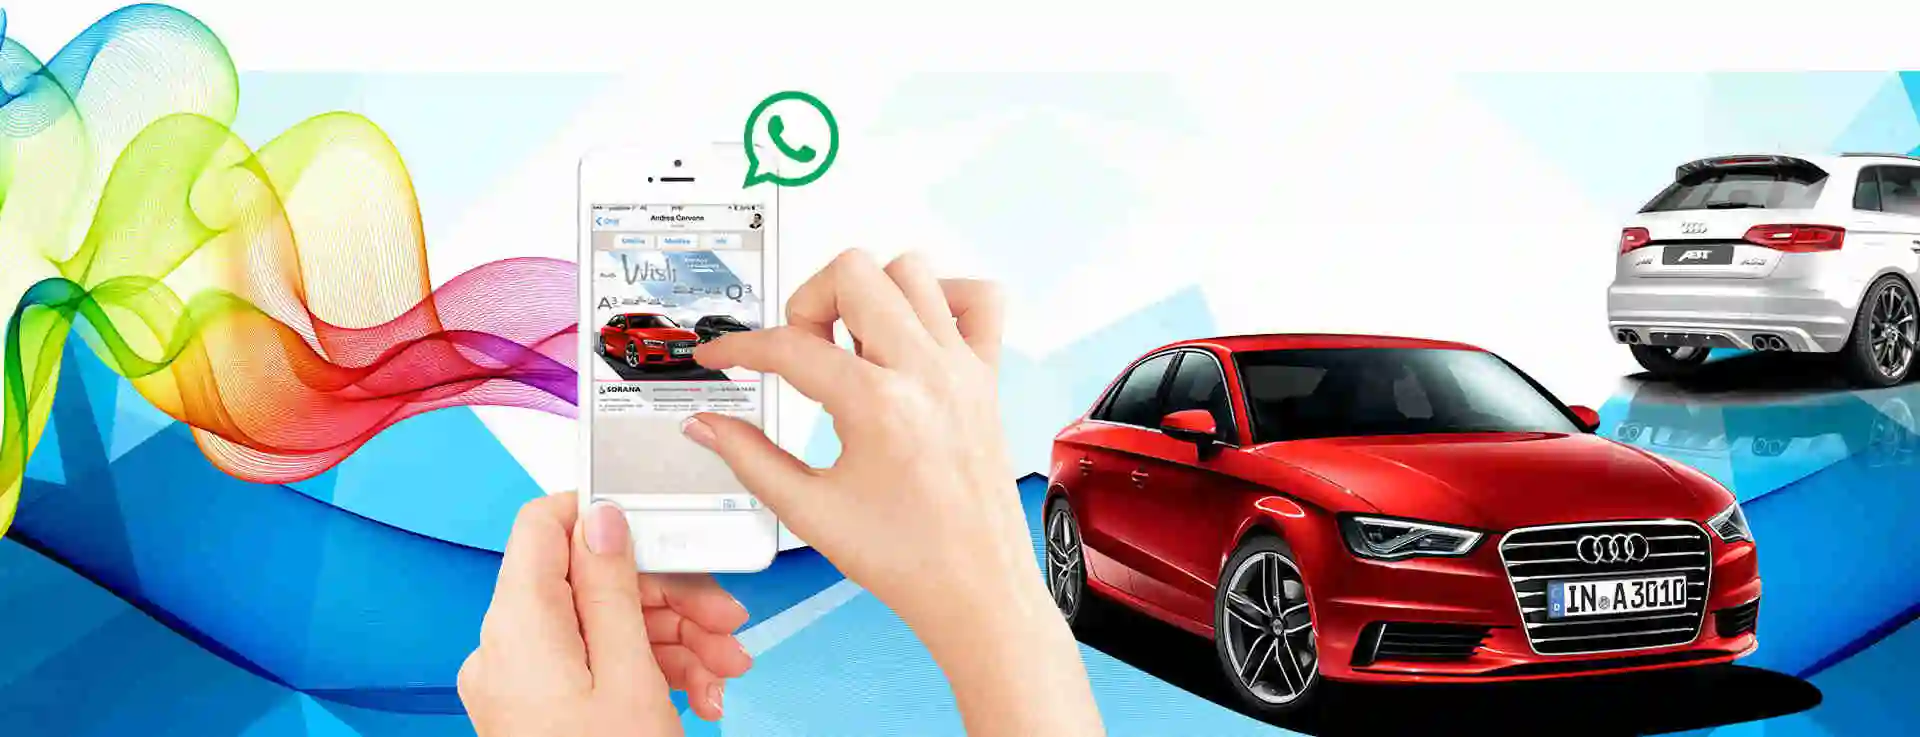 Whatsapp Marketing, Mobile Marketing, SMS Marketing